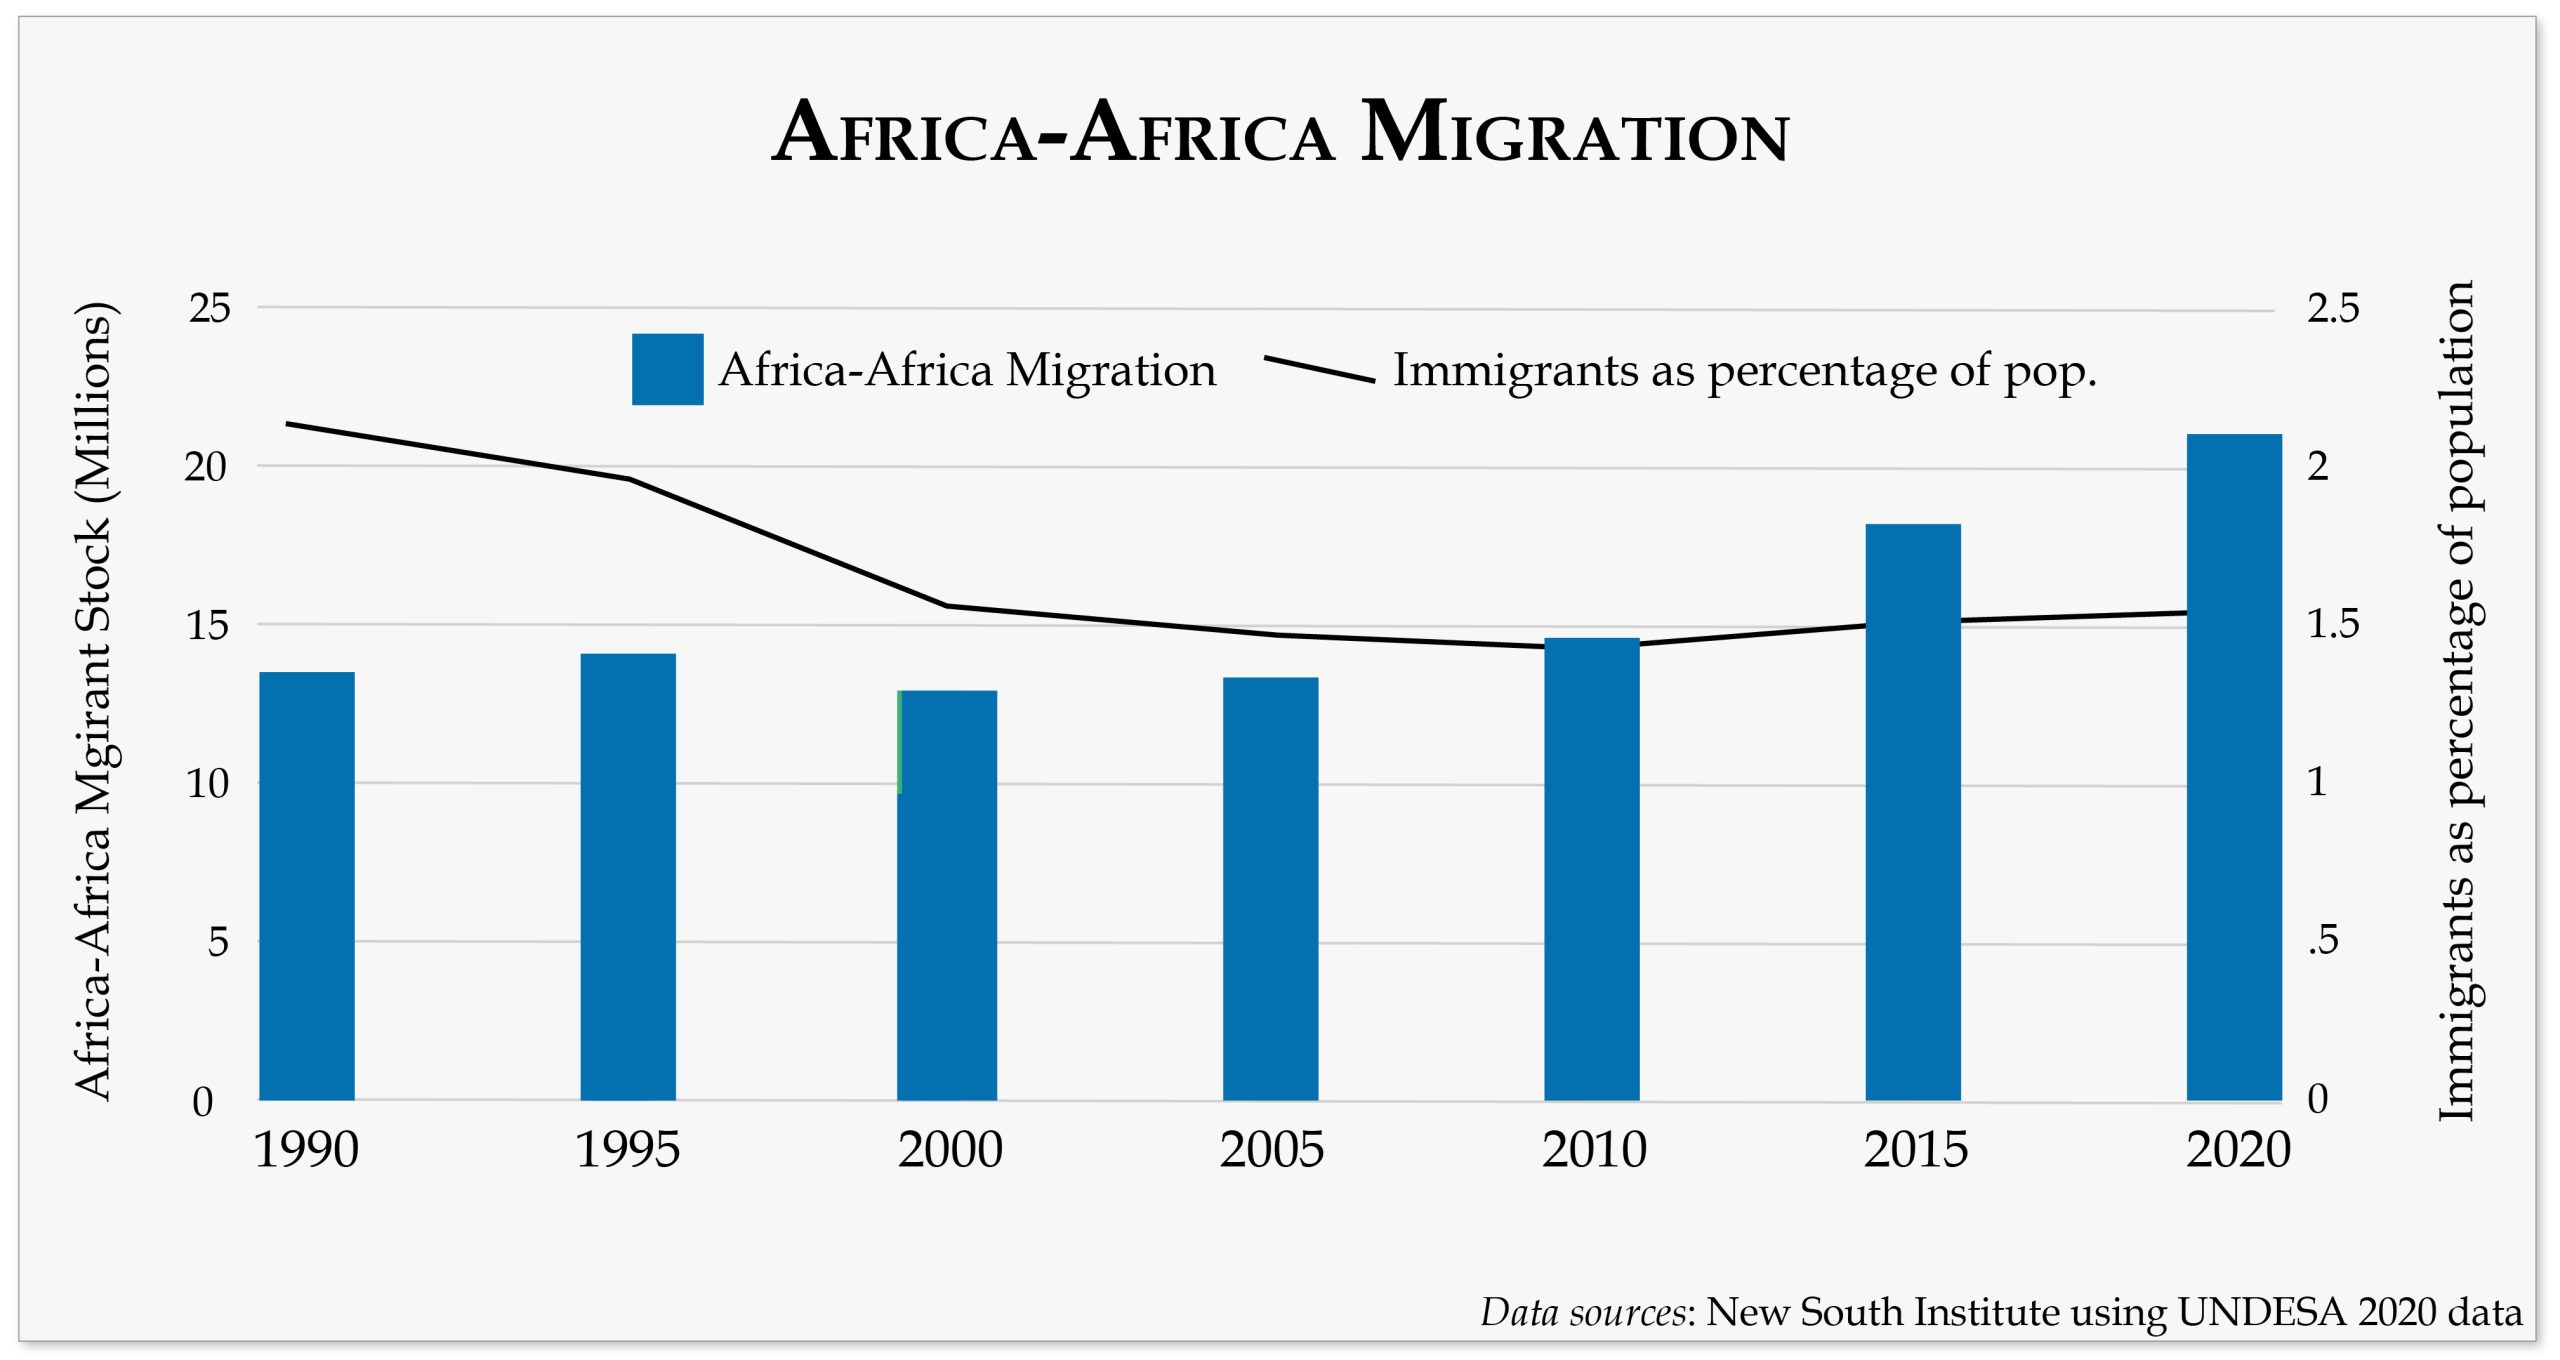 Africa-Africa Migration